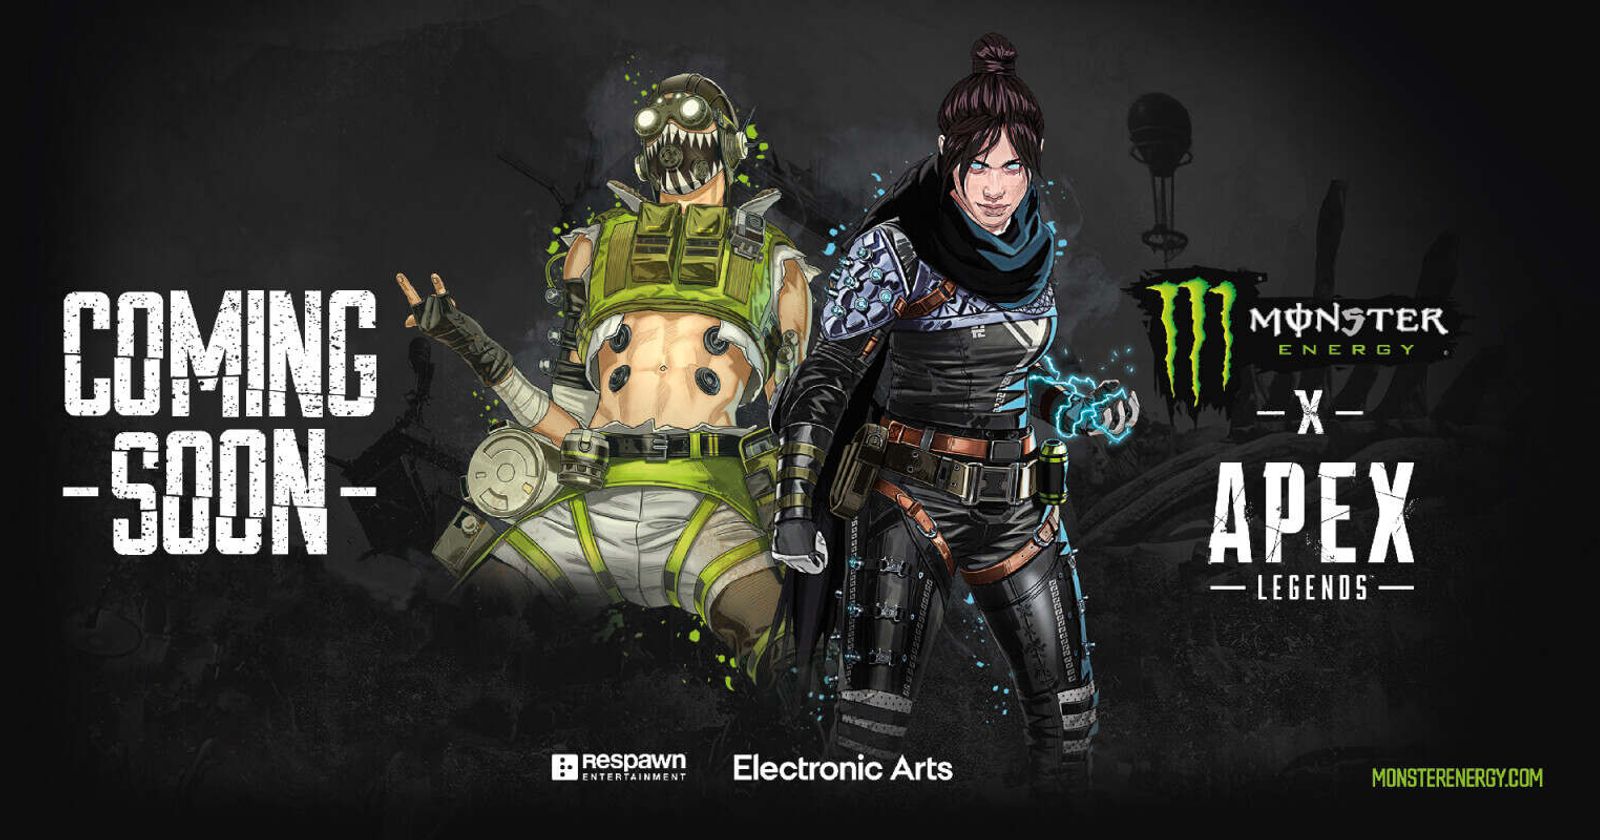 Monster Energy x Call of Duty® Team Up